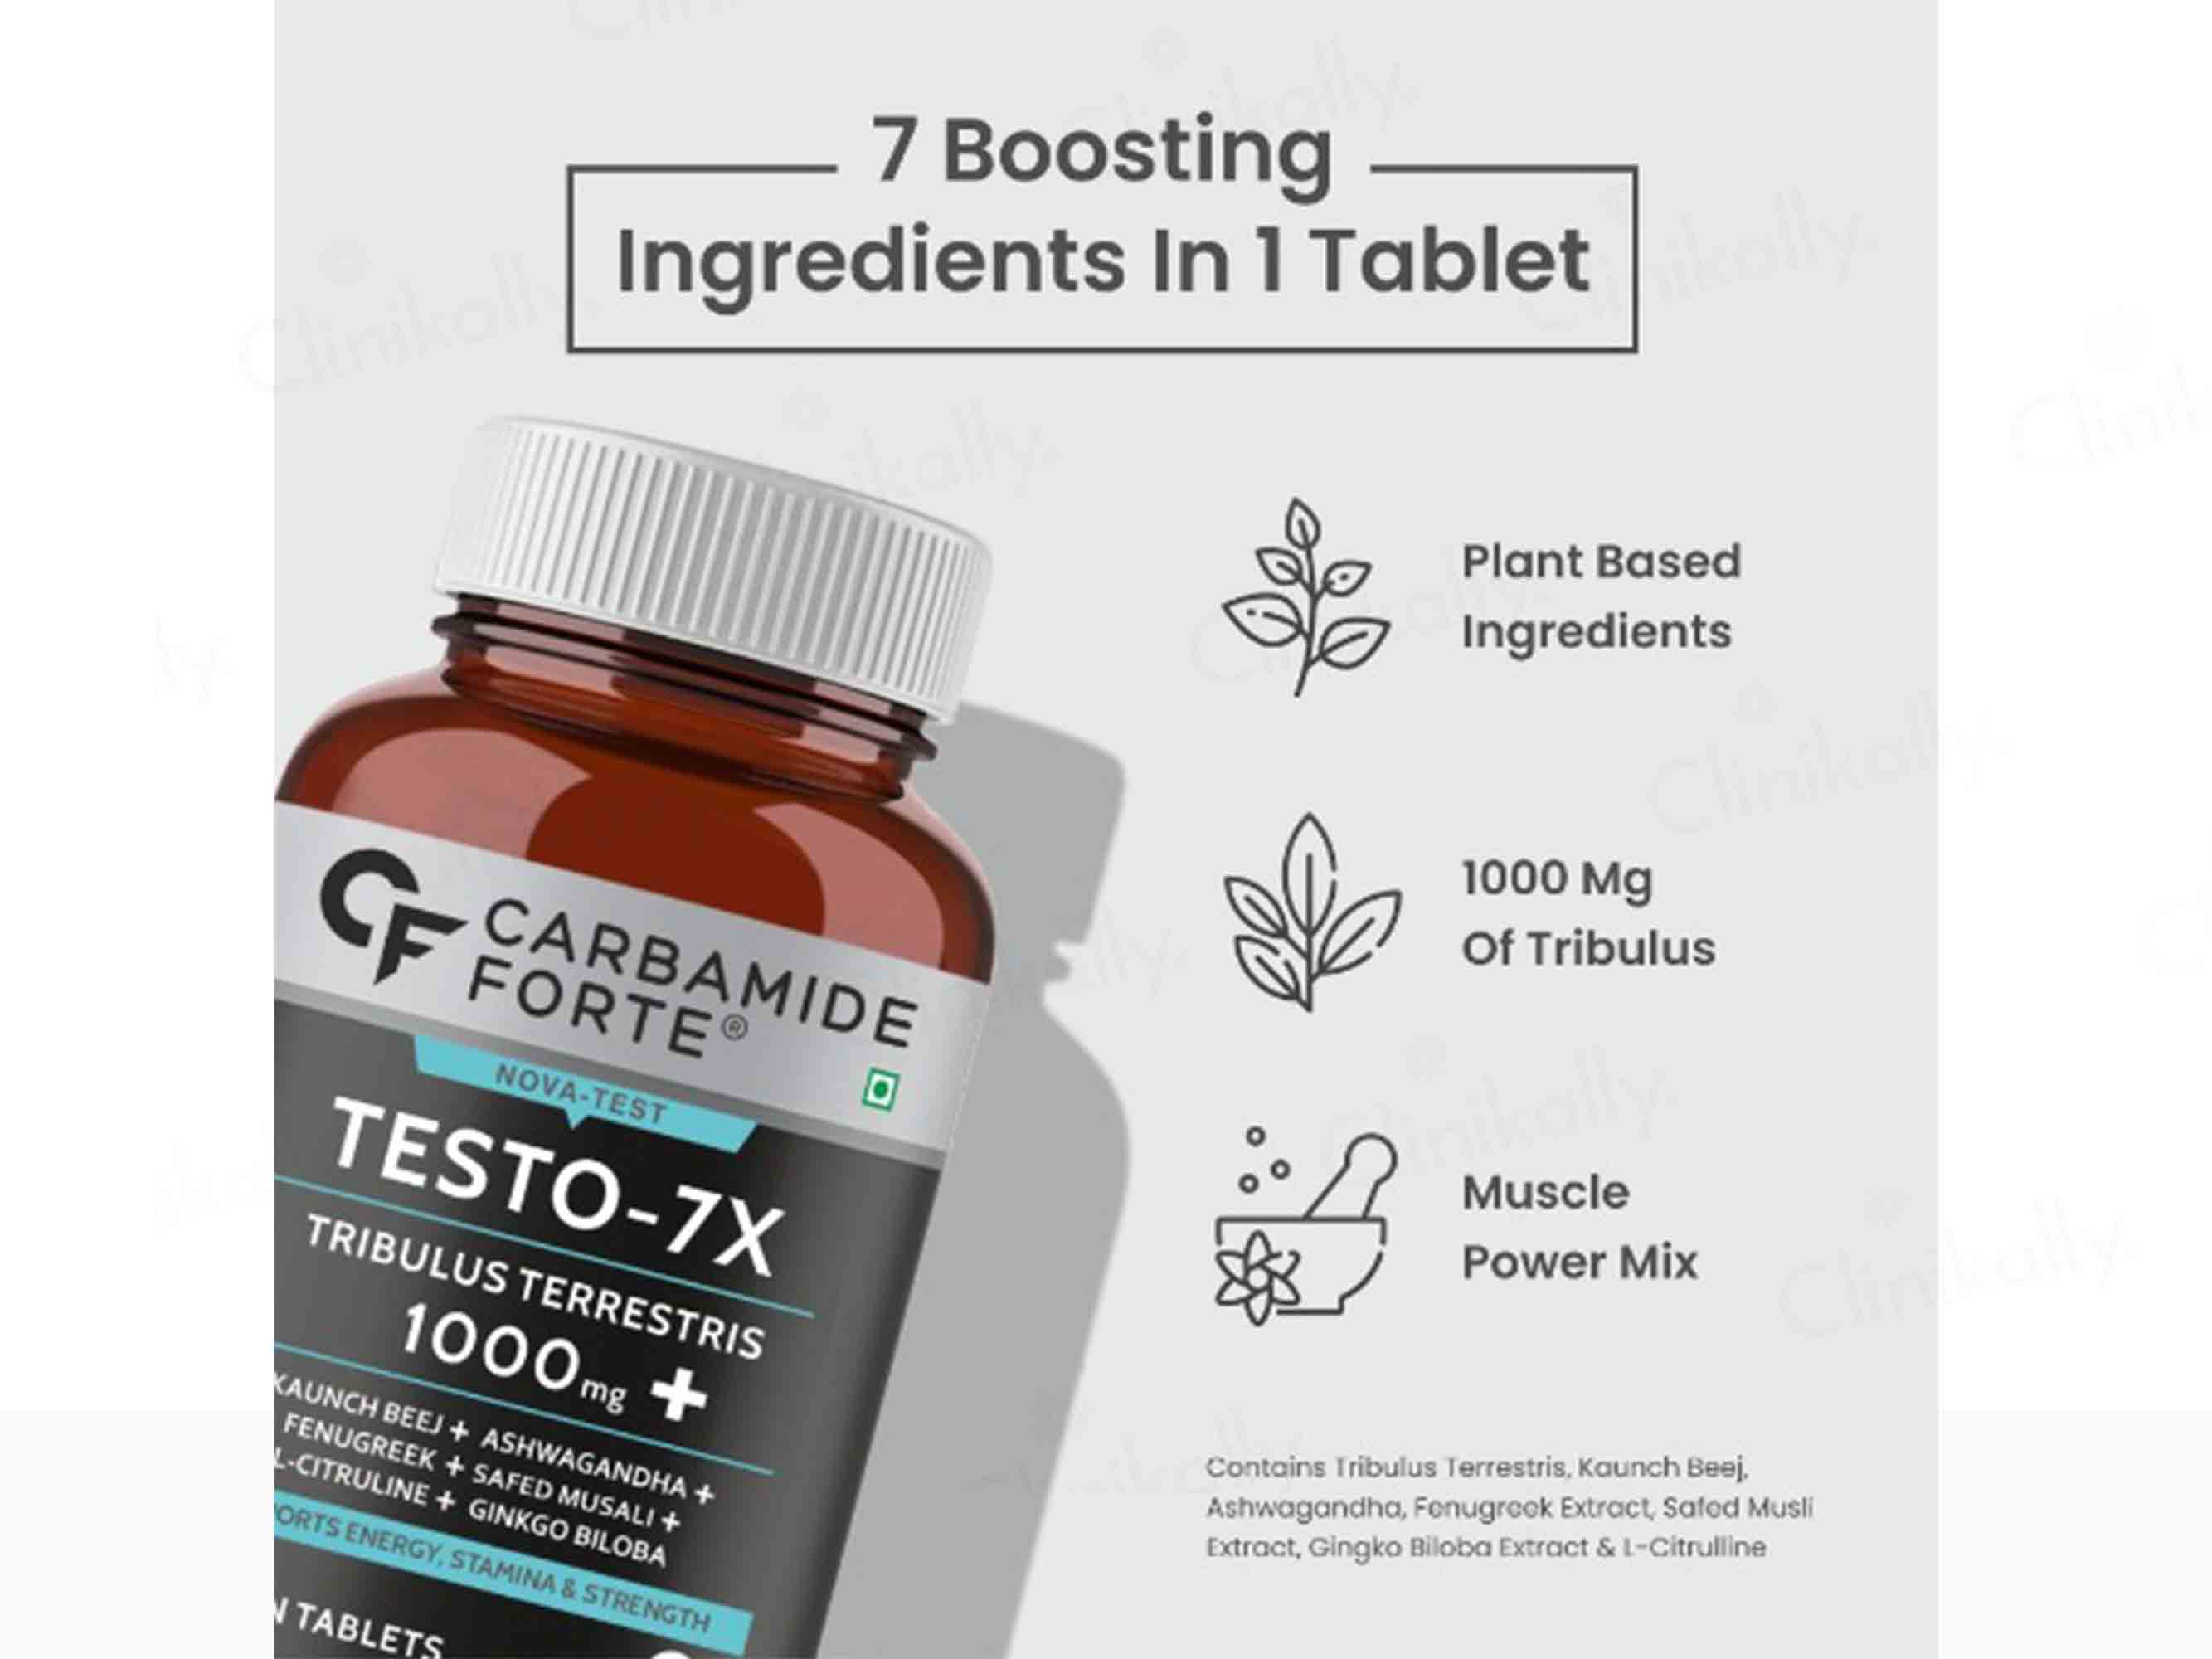 Carbamide Forte Testo-7X Nutraceutical Tablet For Men